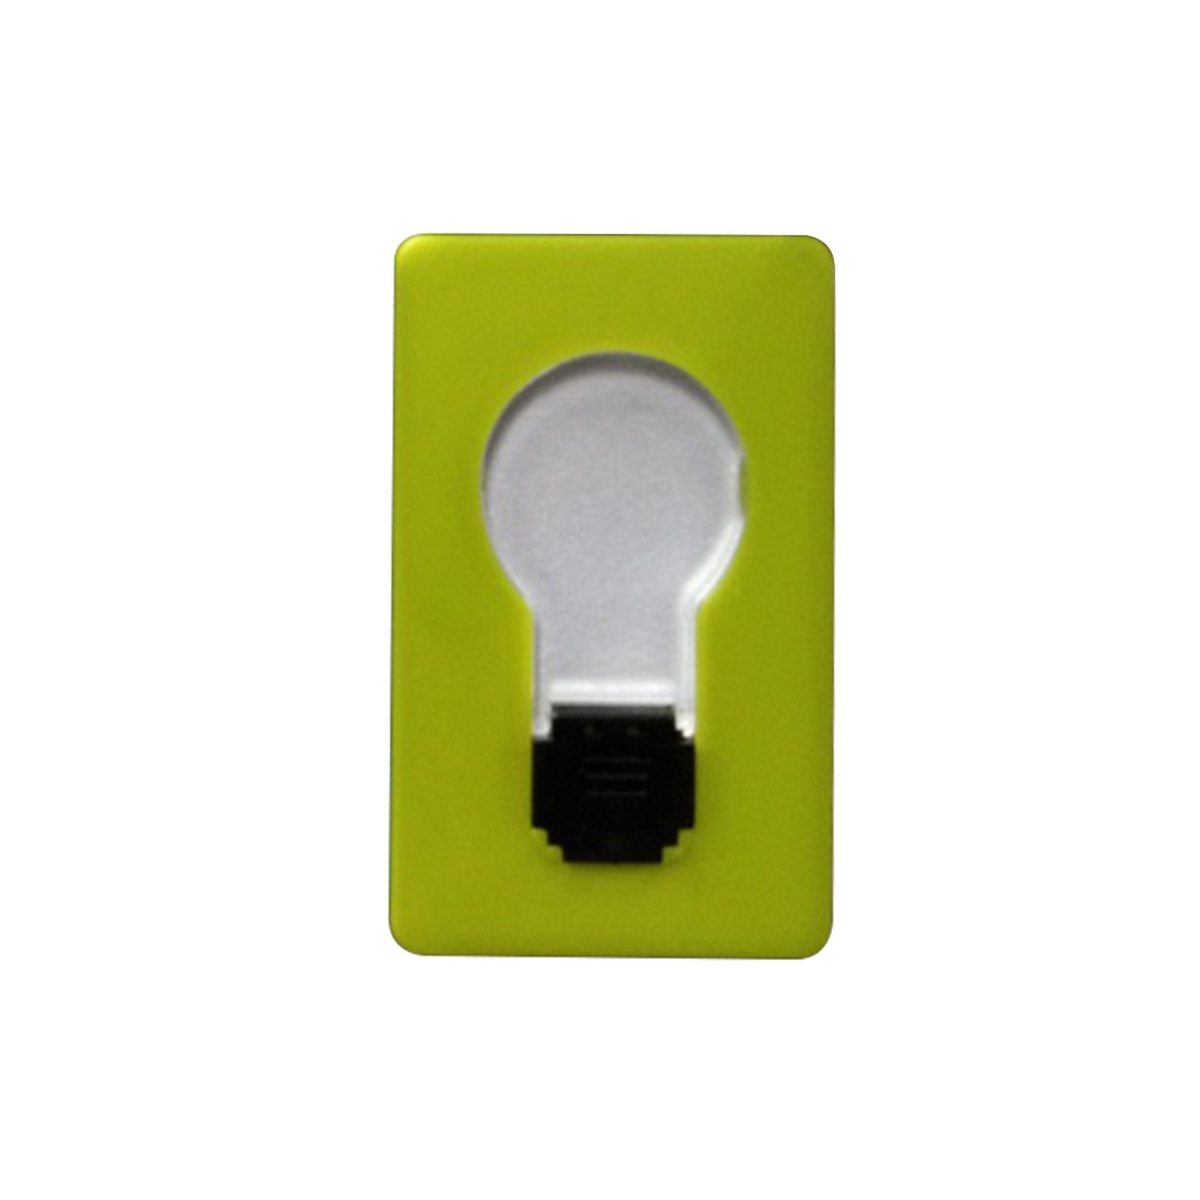 Portable LED Pocket Card Light